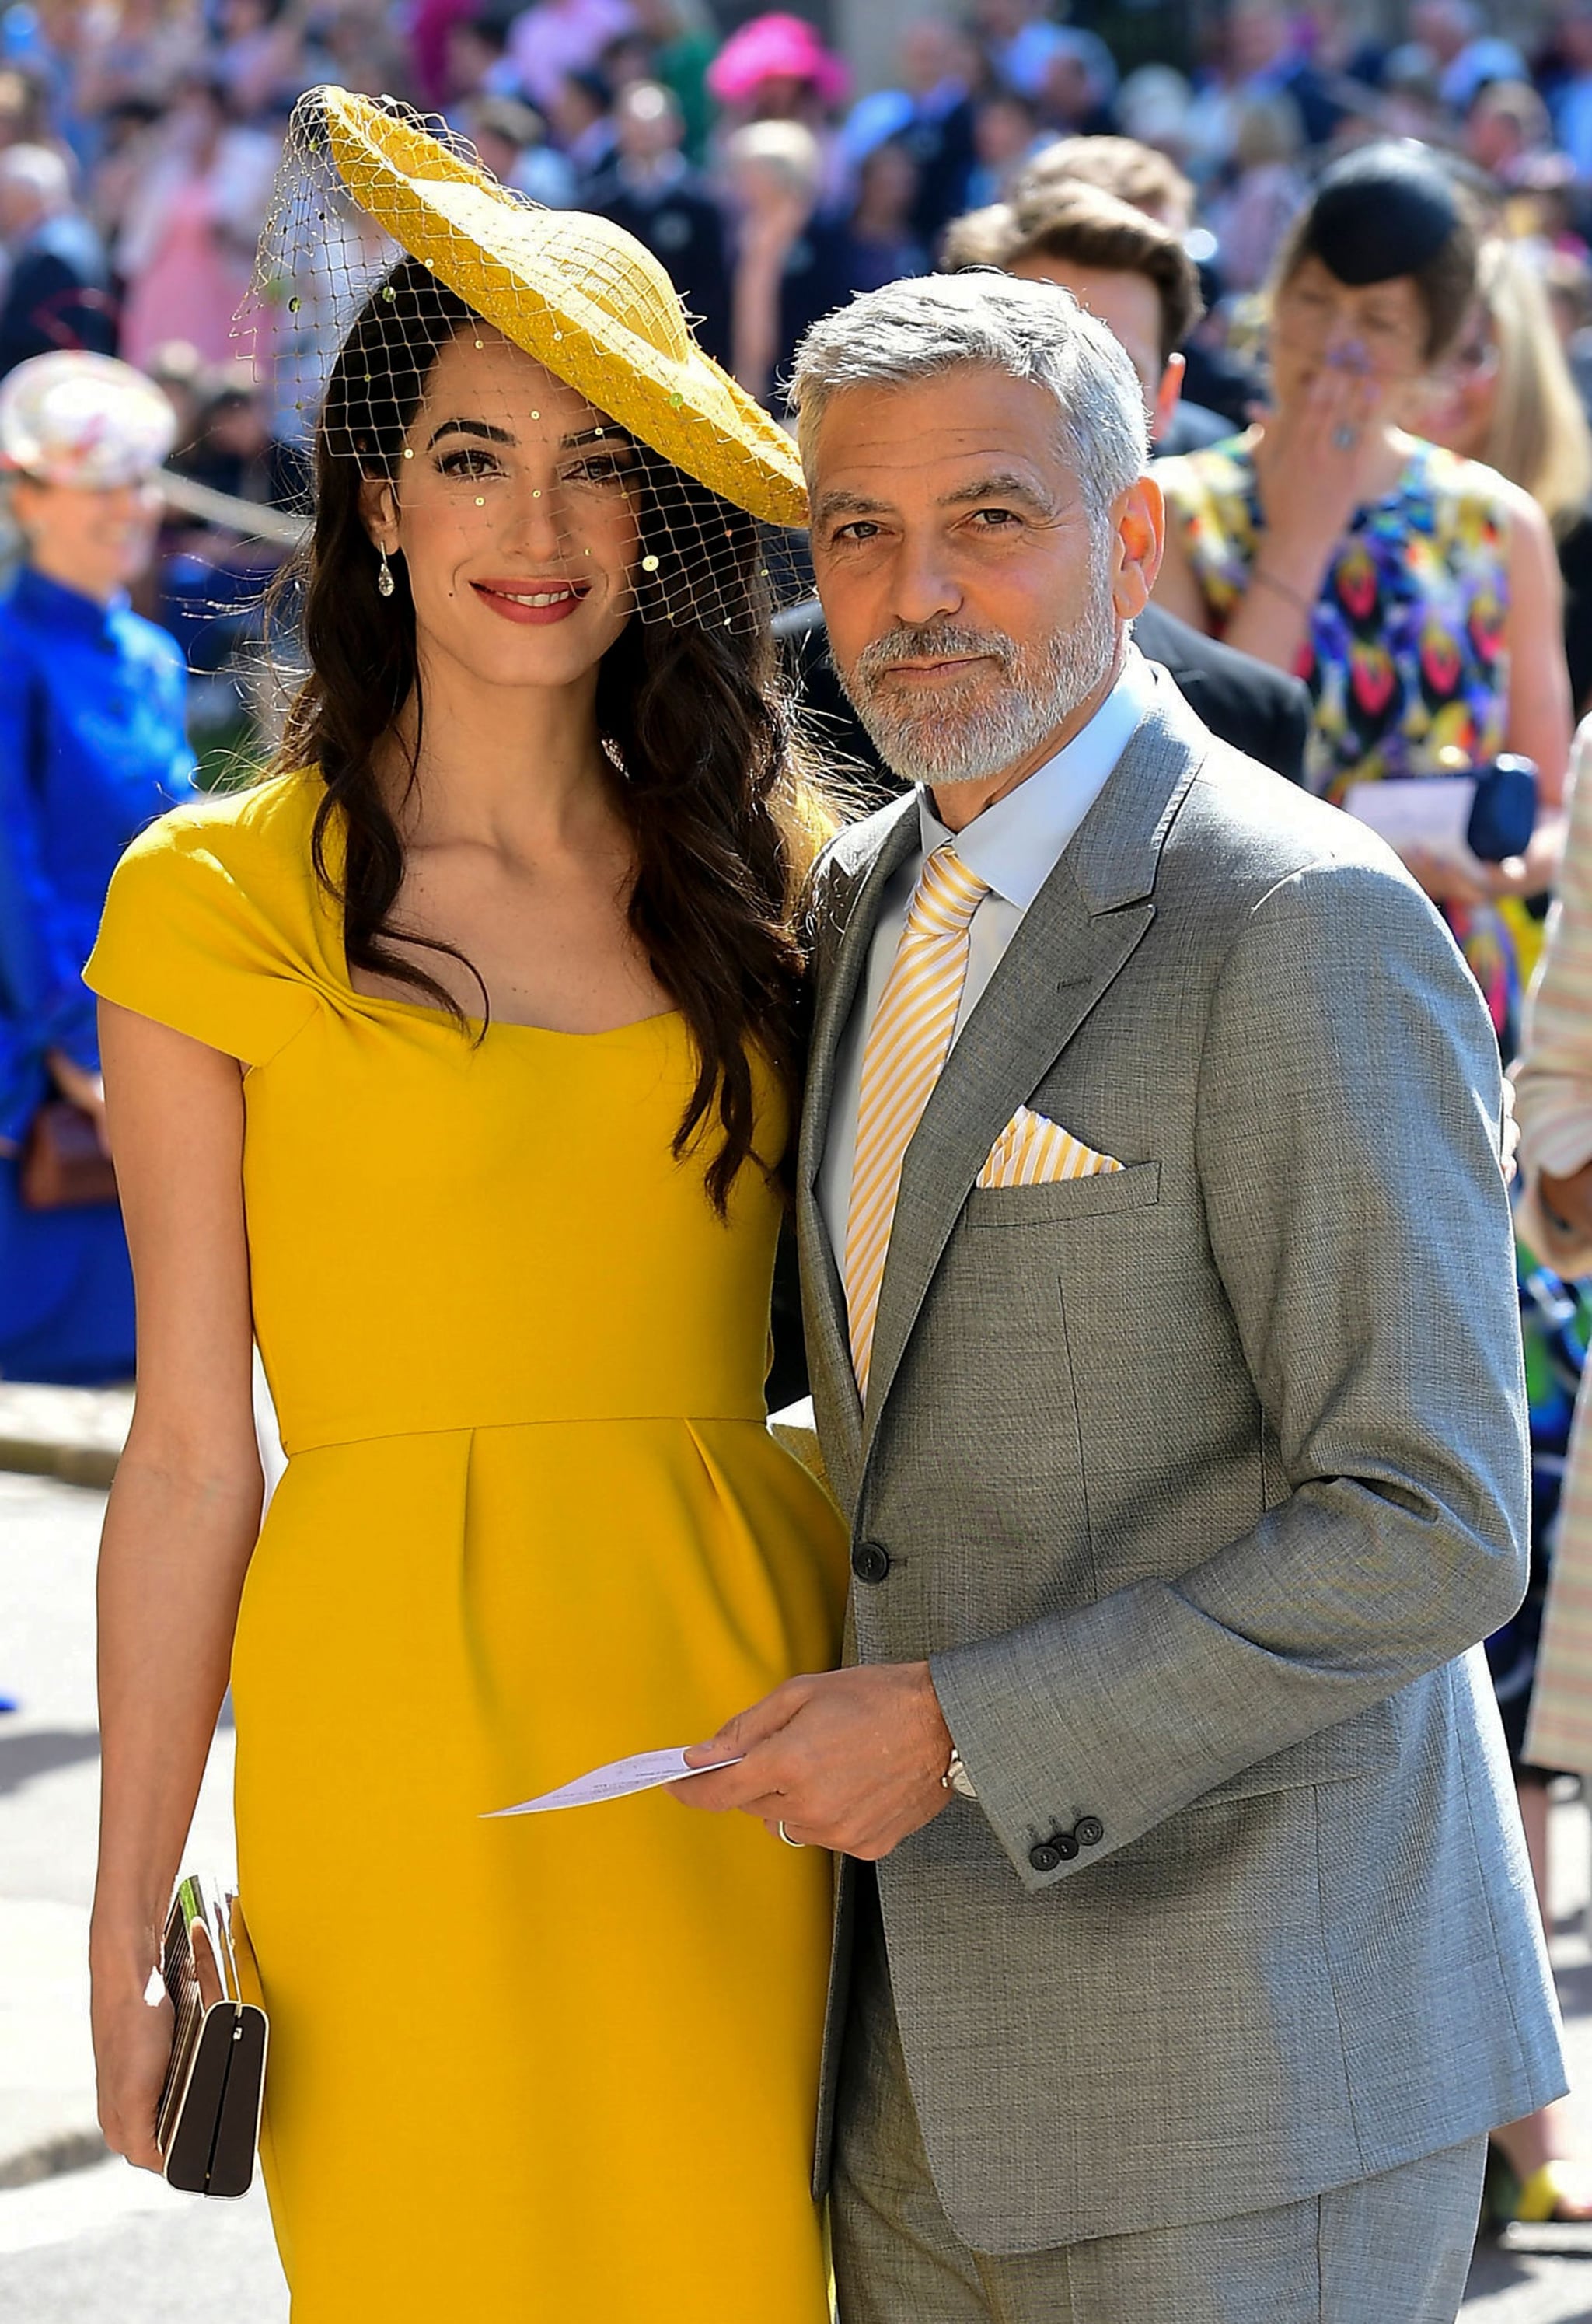 George & Amal Clooney at Prince Harry Meghan Markle Royal Wedding 2018 Topps 19 